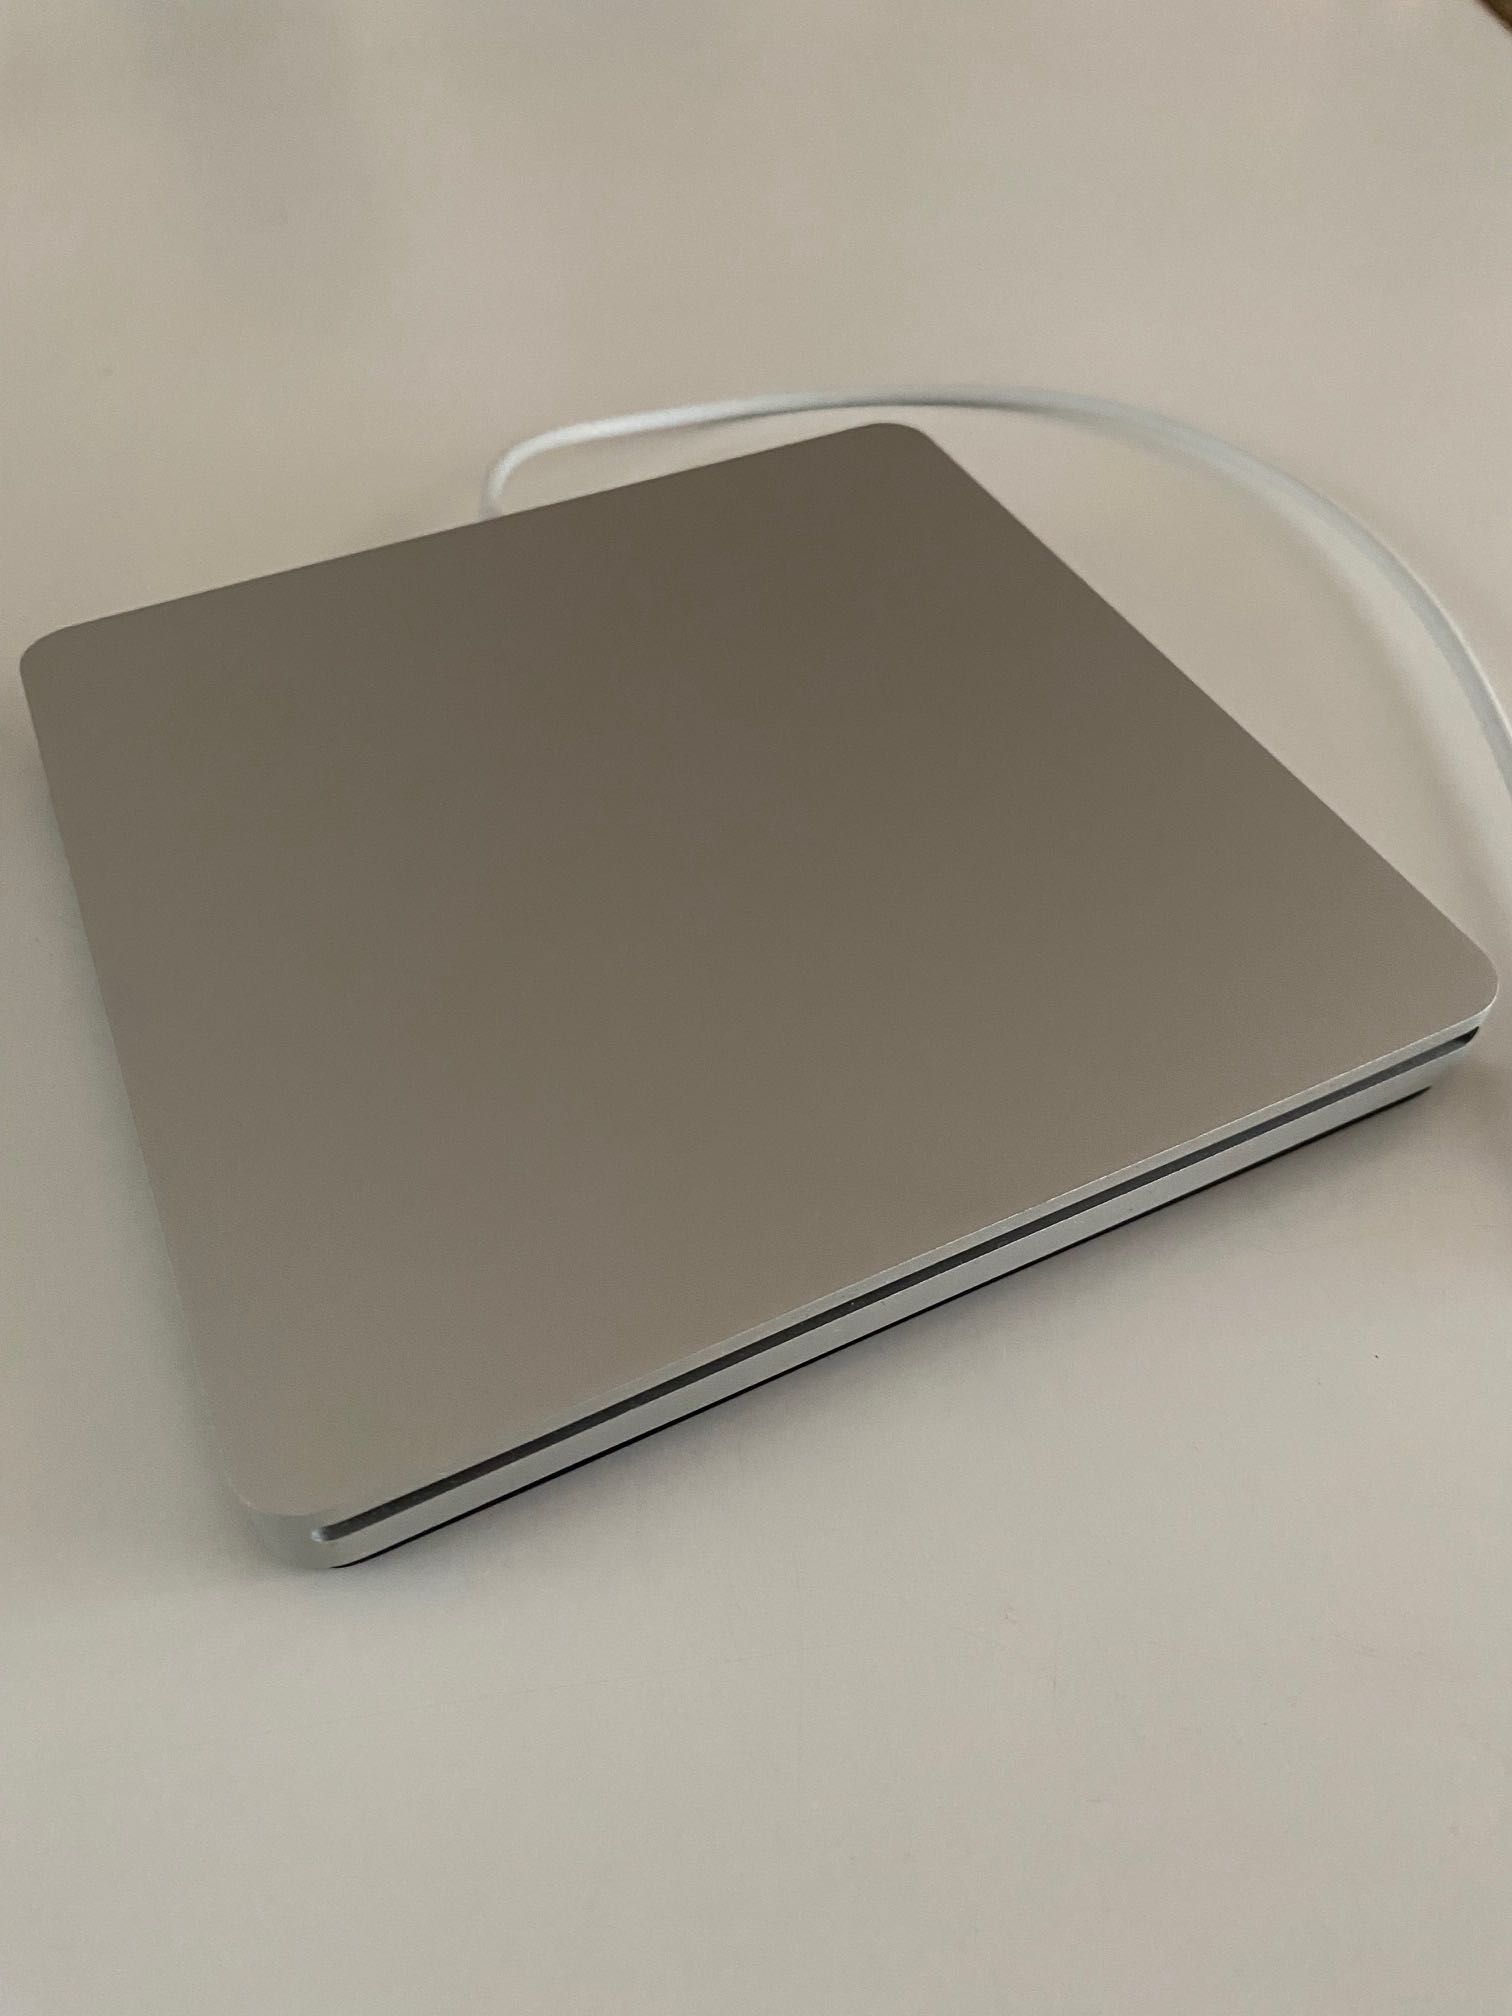 Apple SuperDrive (USB) A1379 impecabil